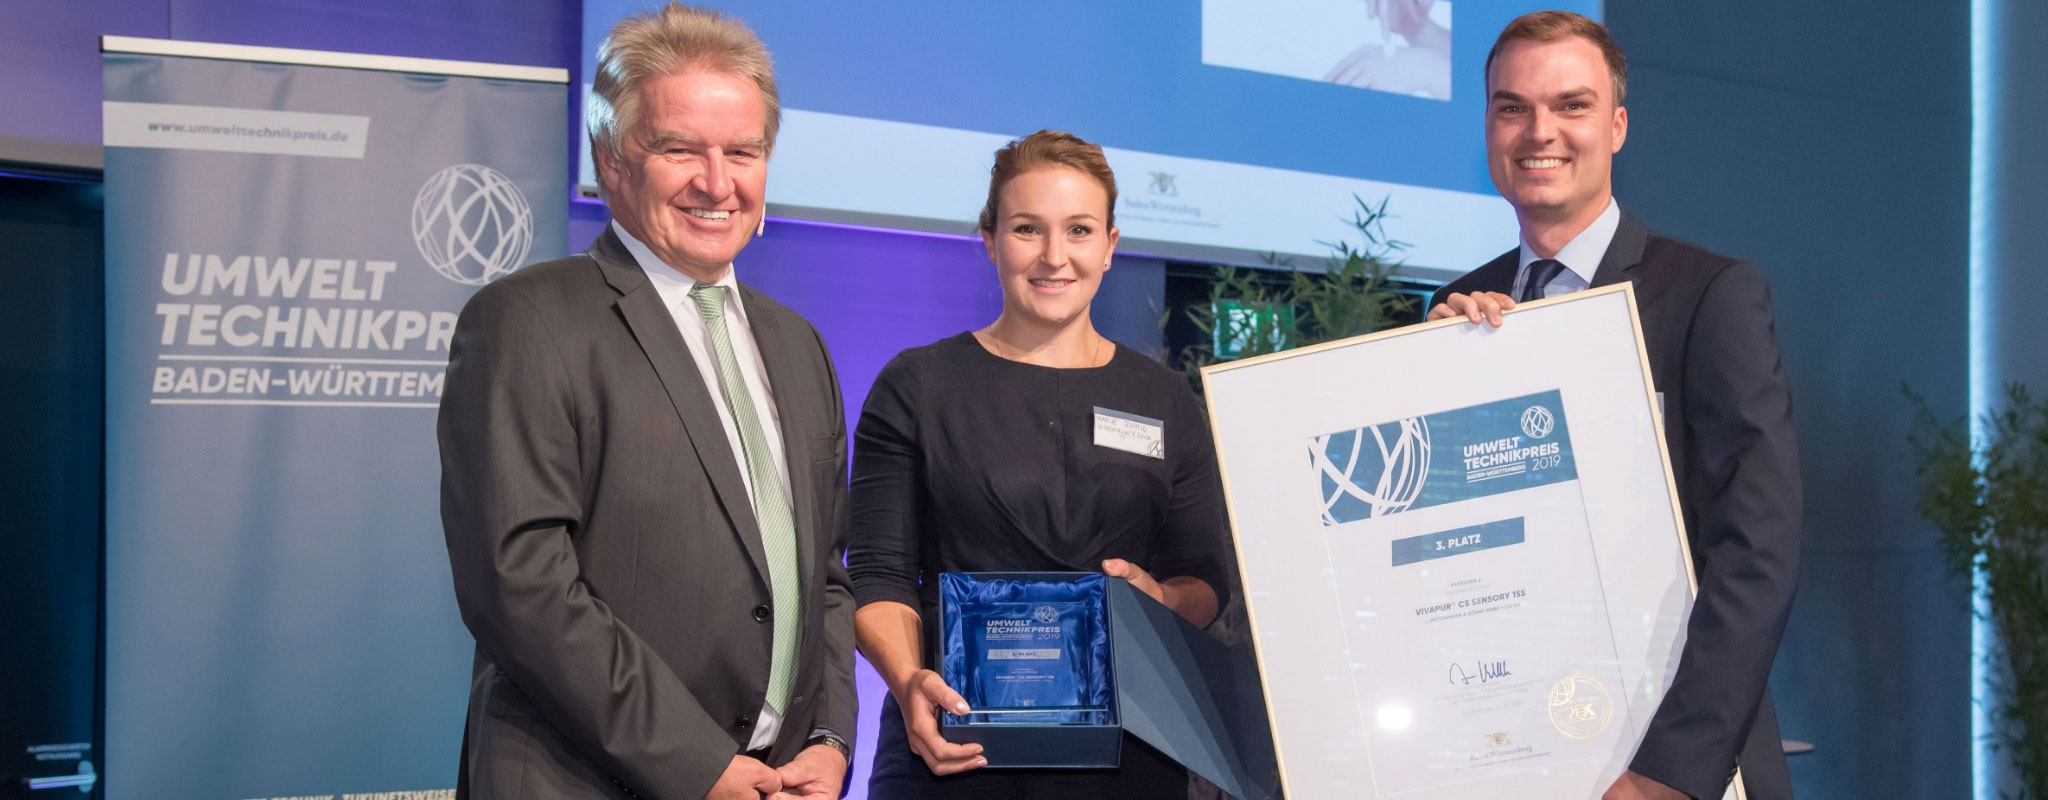 JRS Receives “Baden-Württemberg Environmental Technology Award” 2019